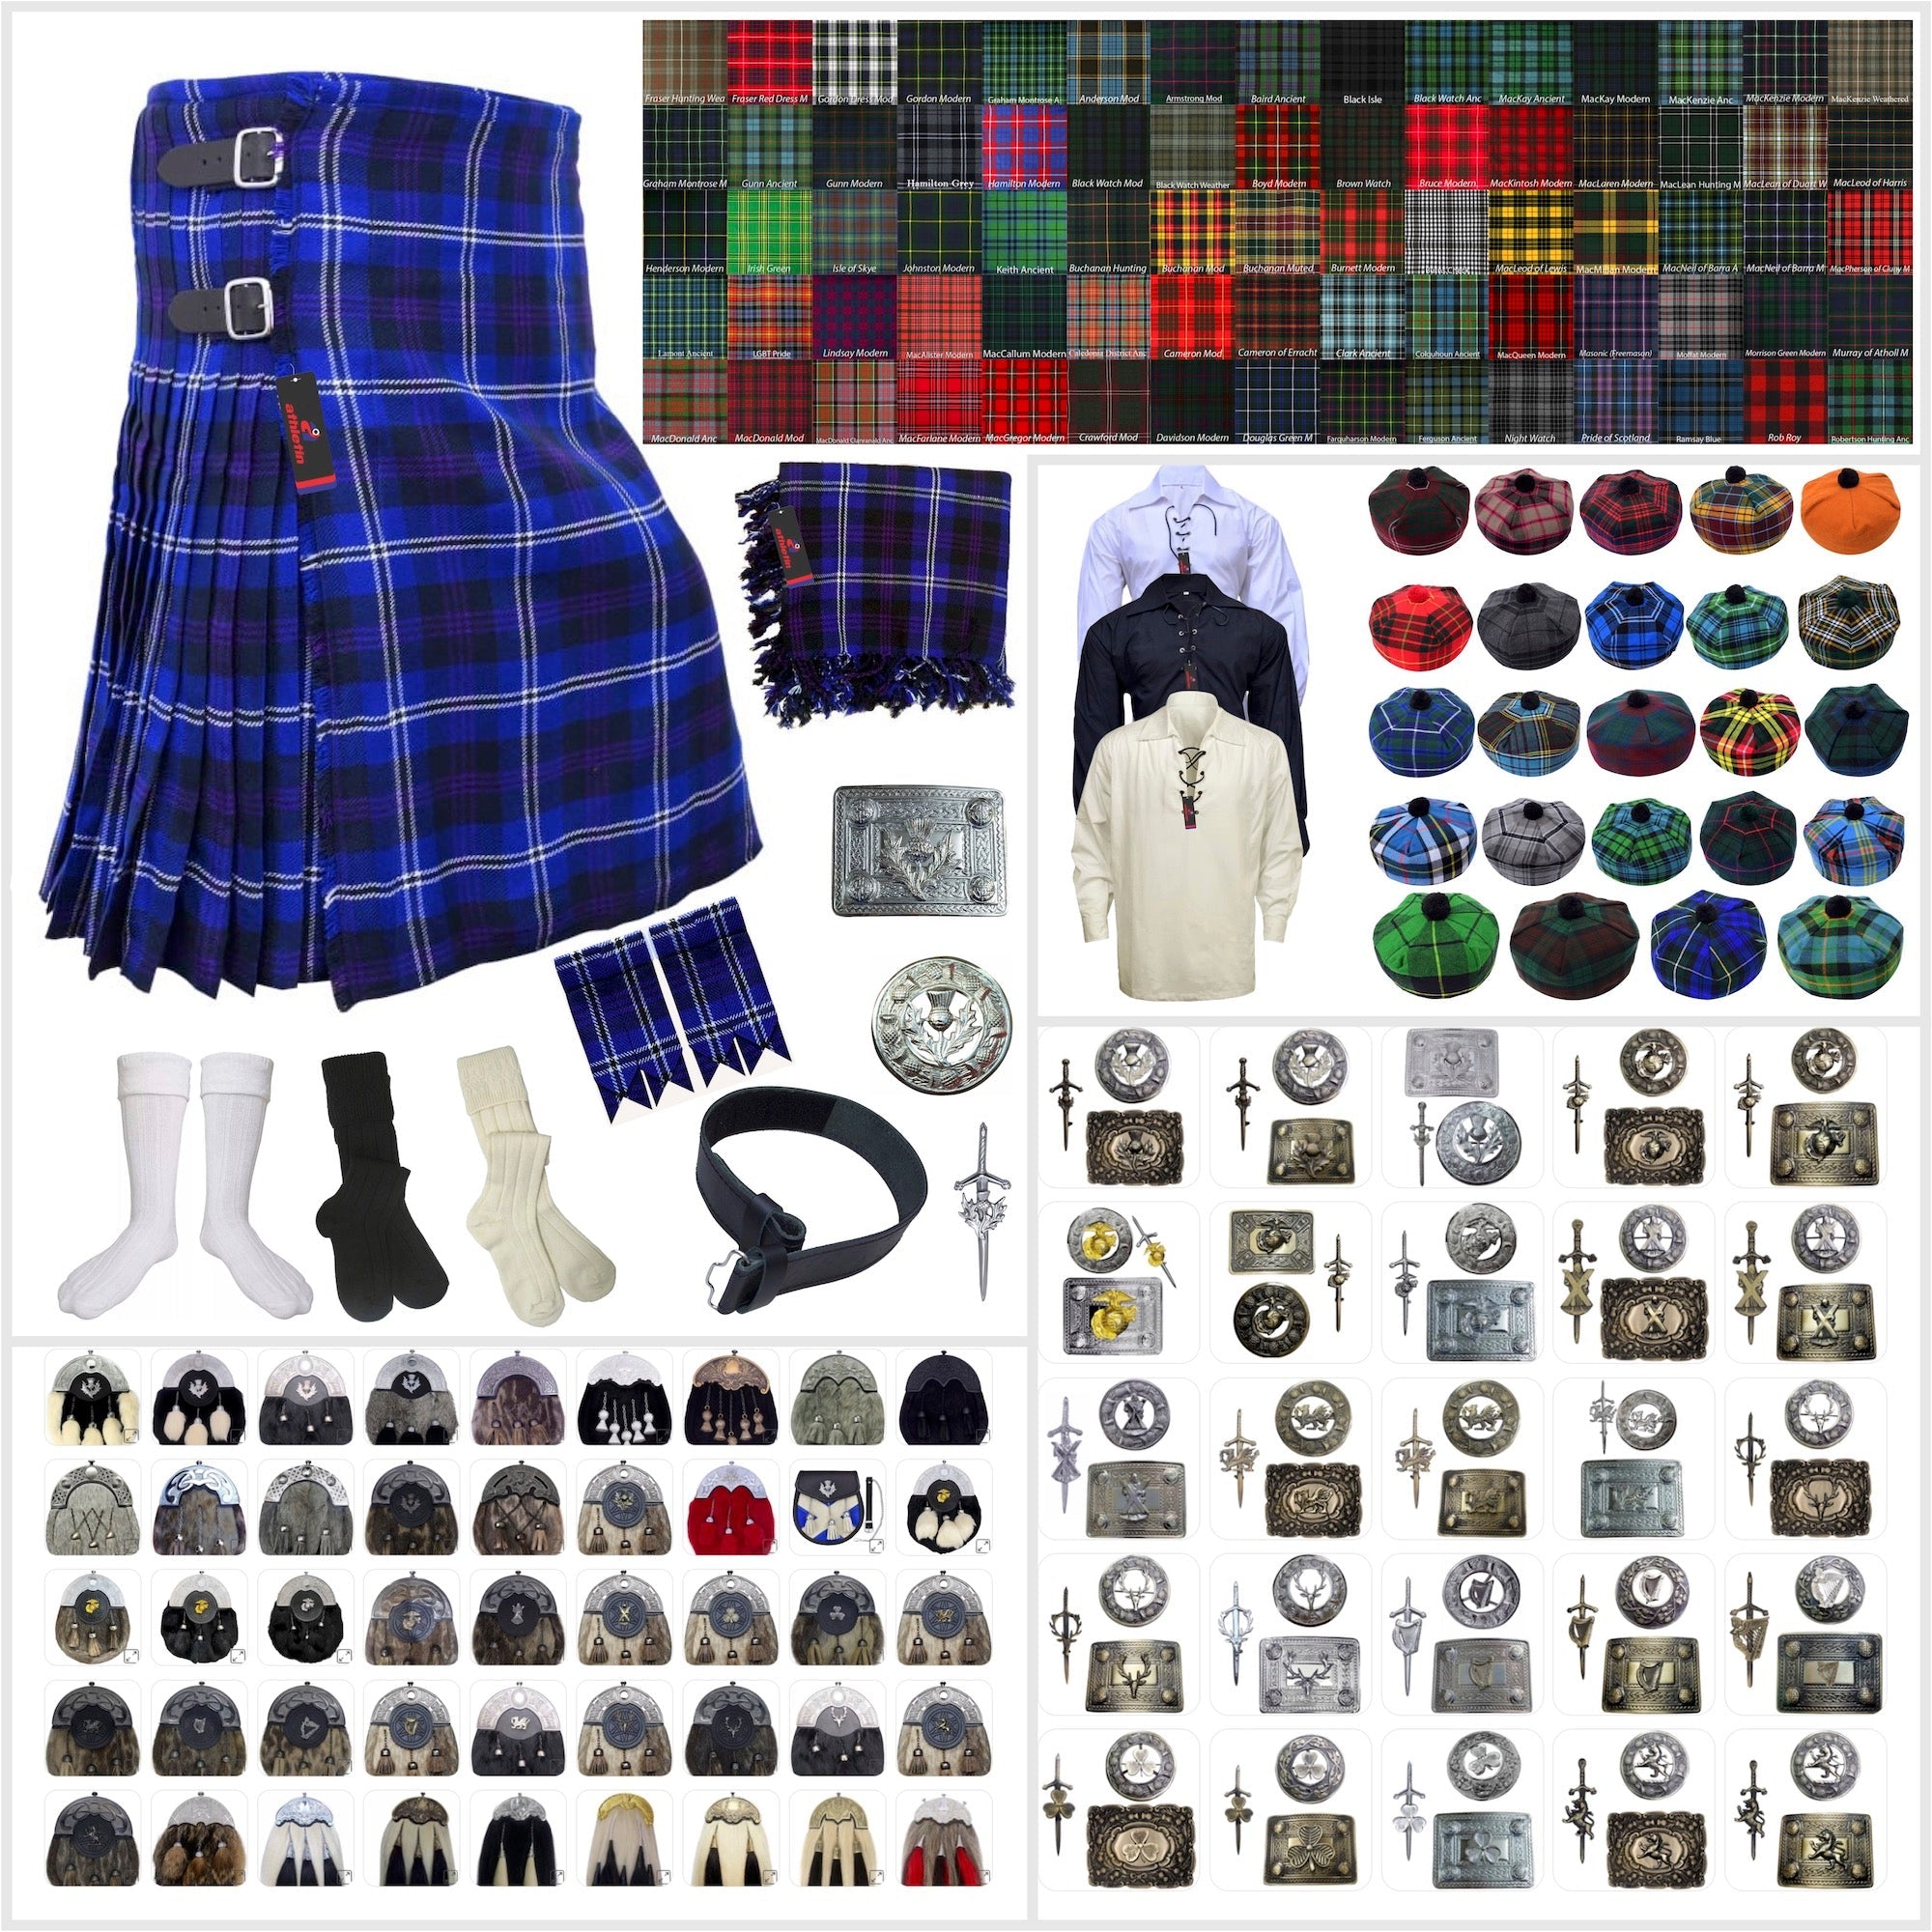 Heritage of Scotland Tartan Kilt Outfit - Authentic Scottish Attire